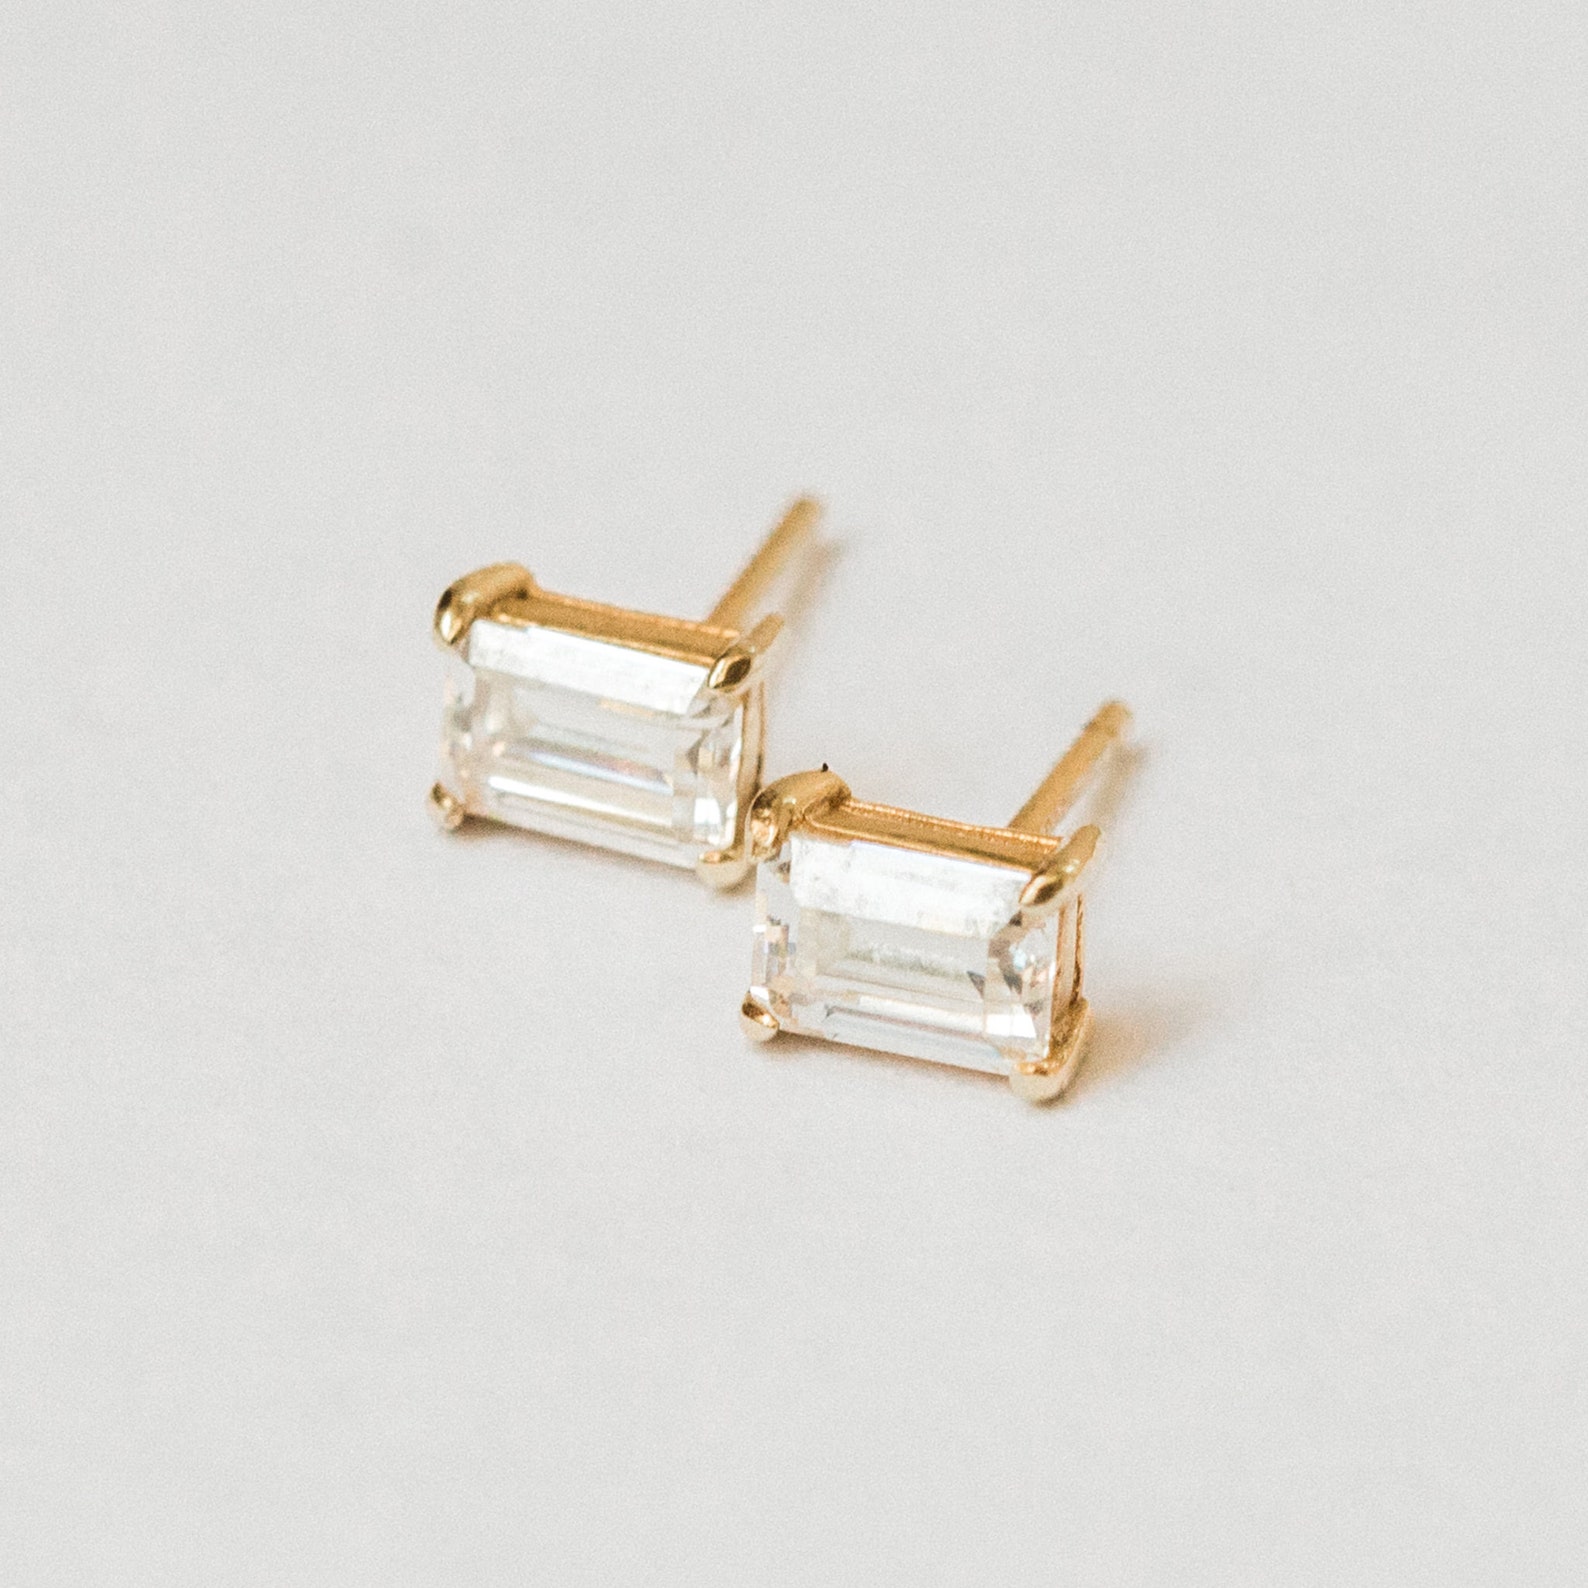 Emerald Cut Diamond Stud Earrings 14K Gold Vermeil or Solid - Etsy ...